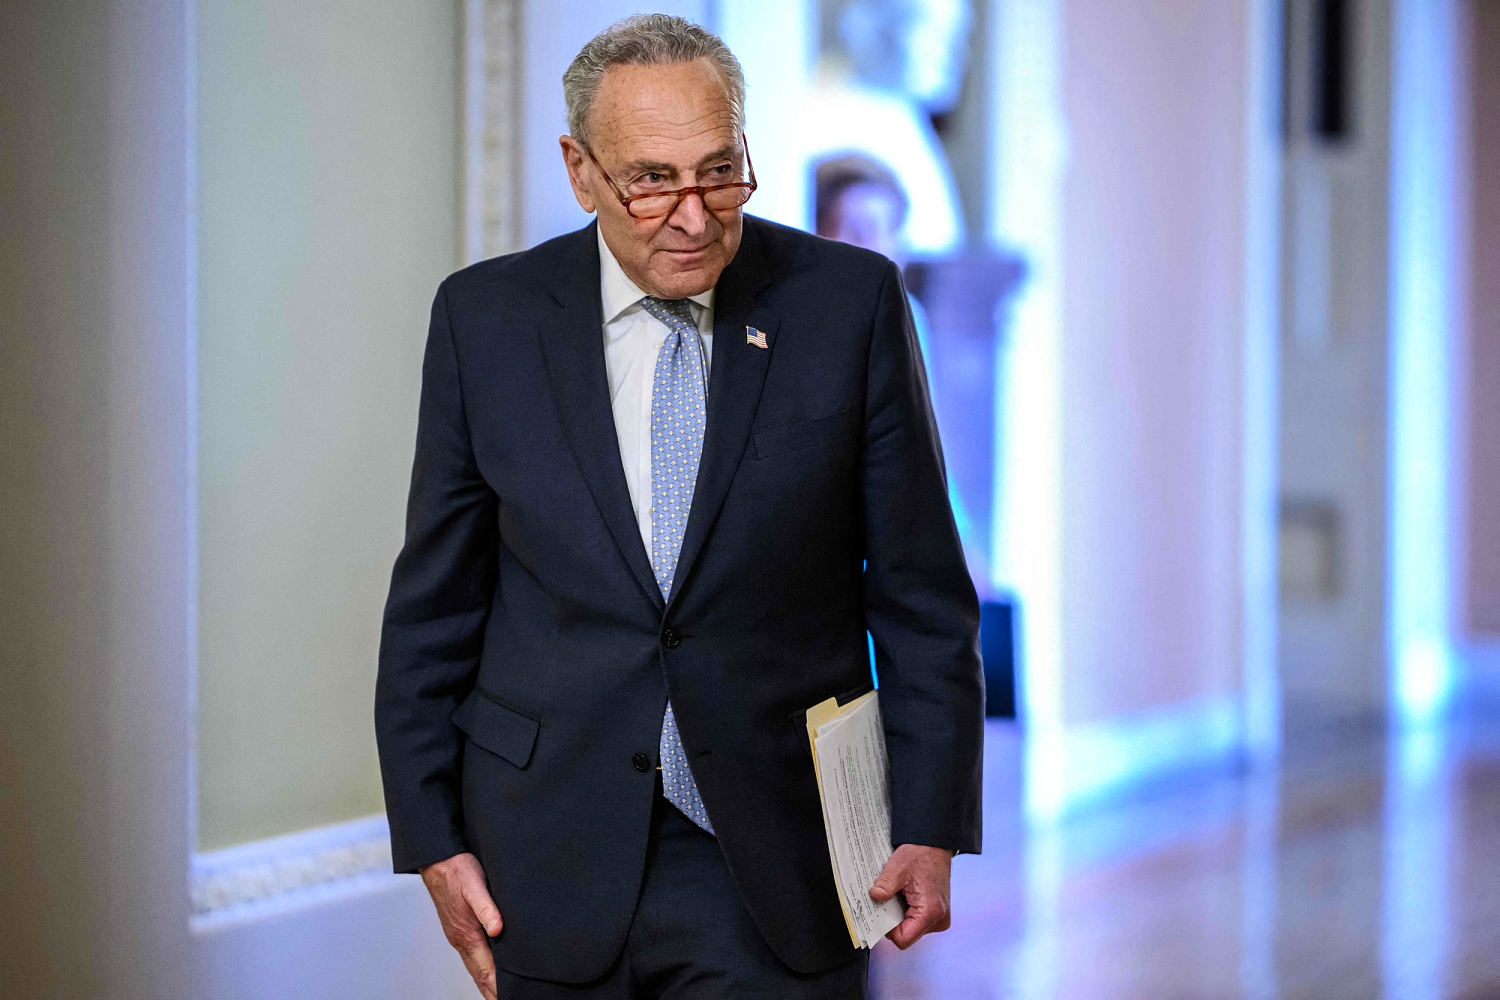 Senate introduces a bipartisan bill to keep the government open through Nov. 17